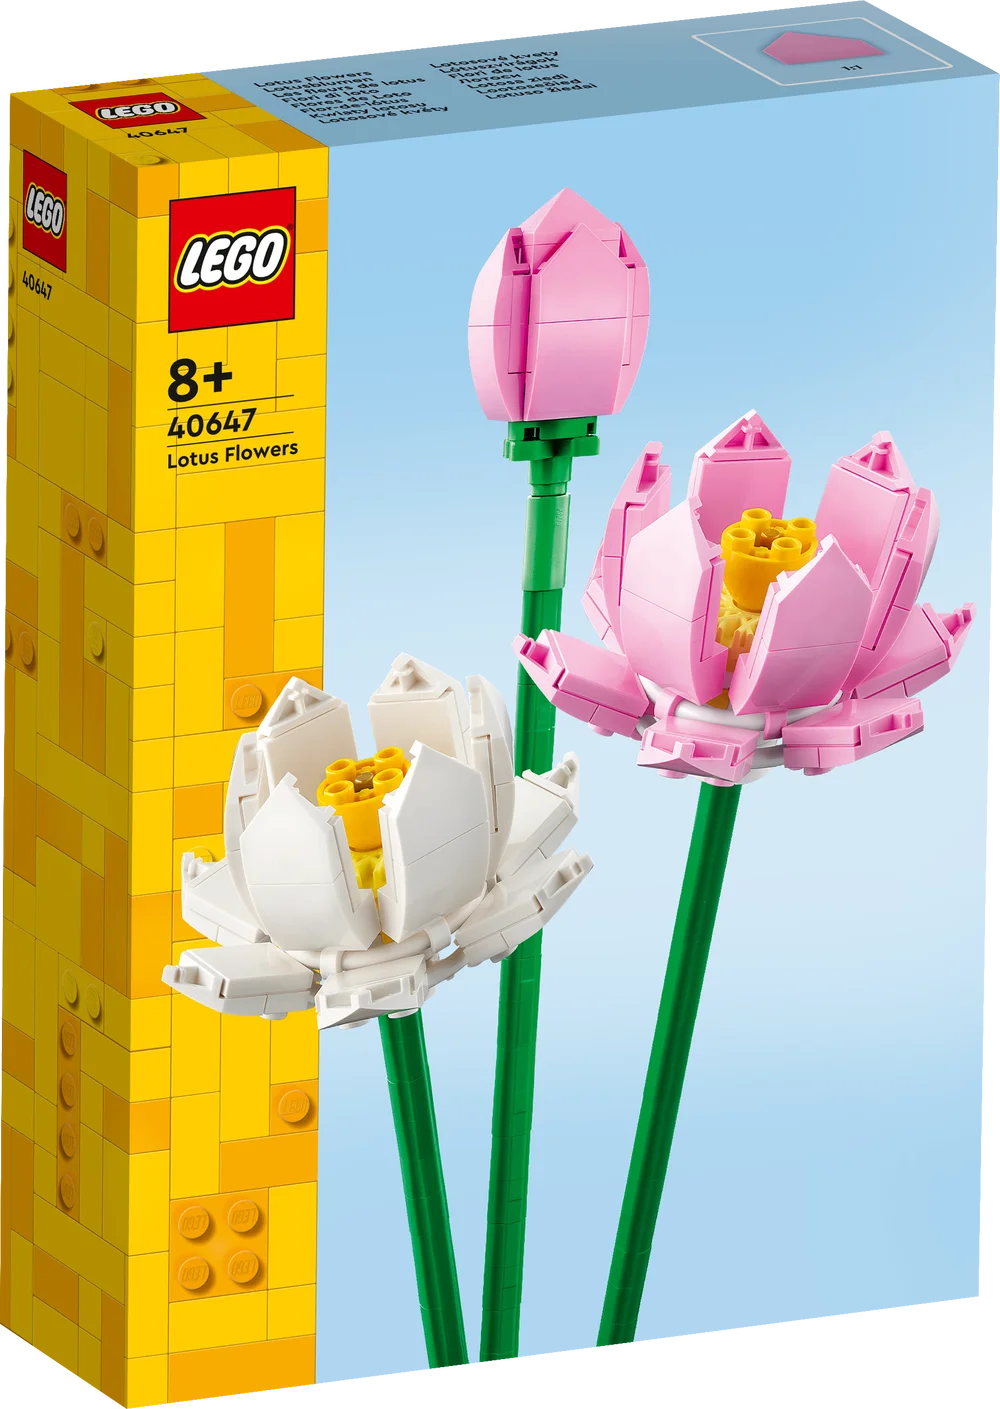 LEGO Iconic 40647 Lotus Flowers - Brick Store